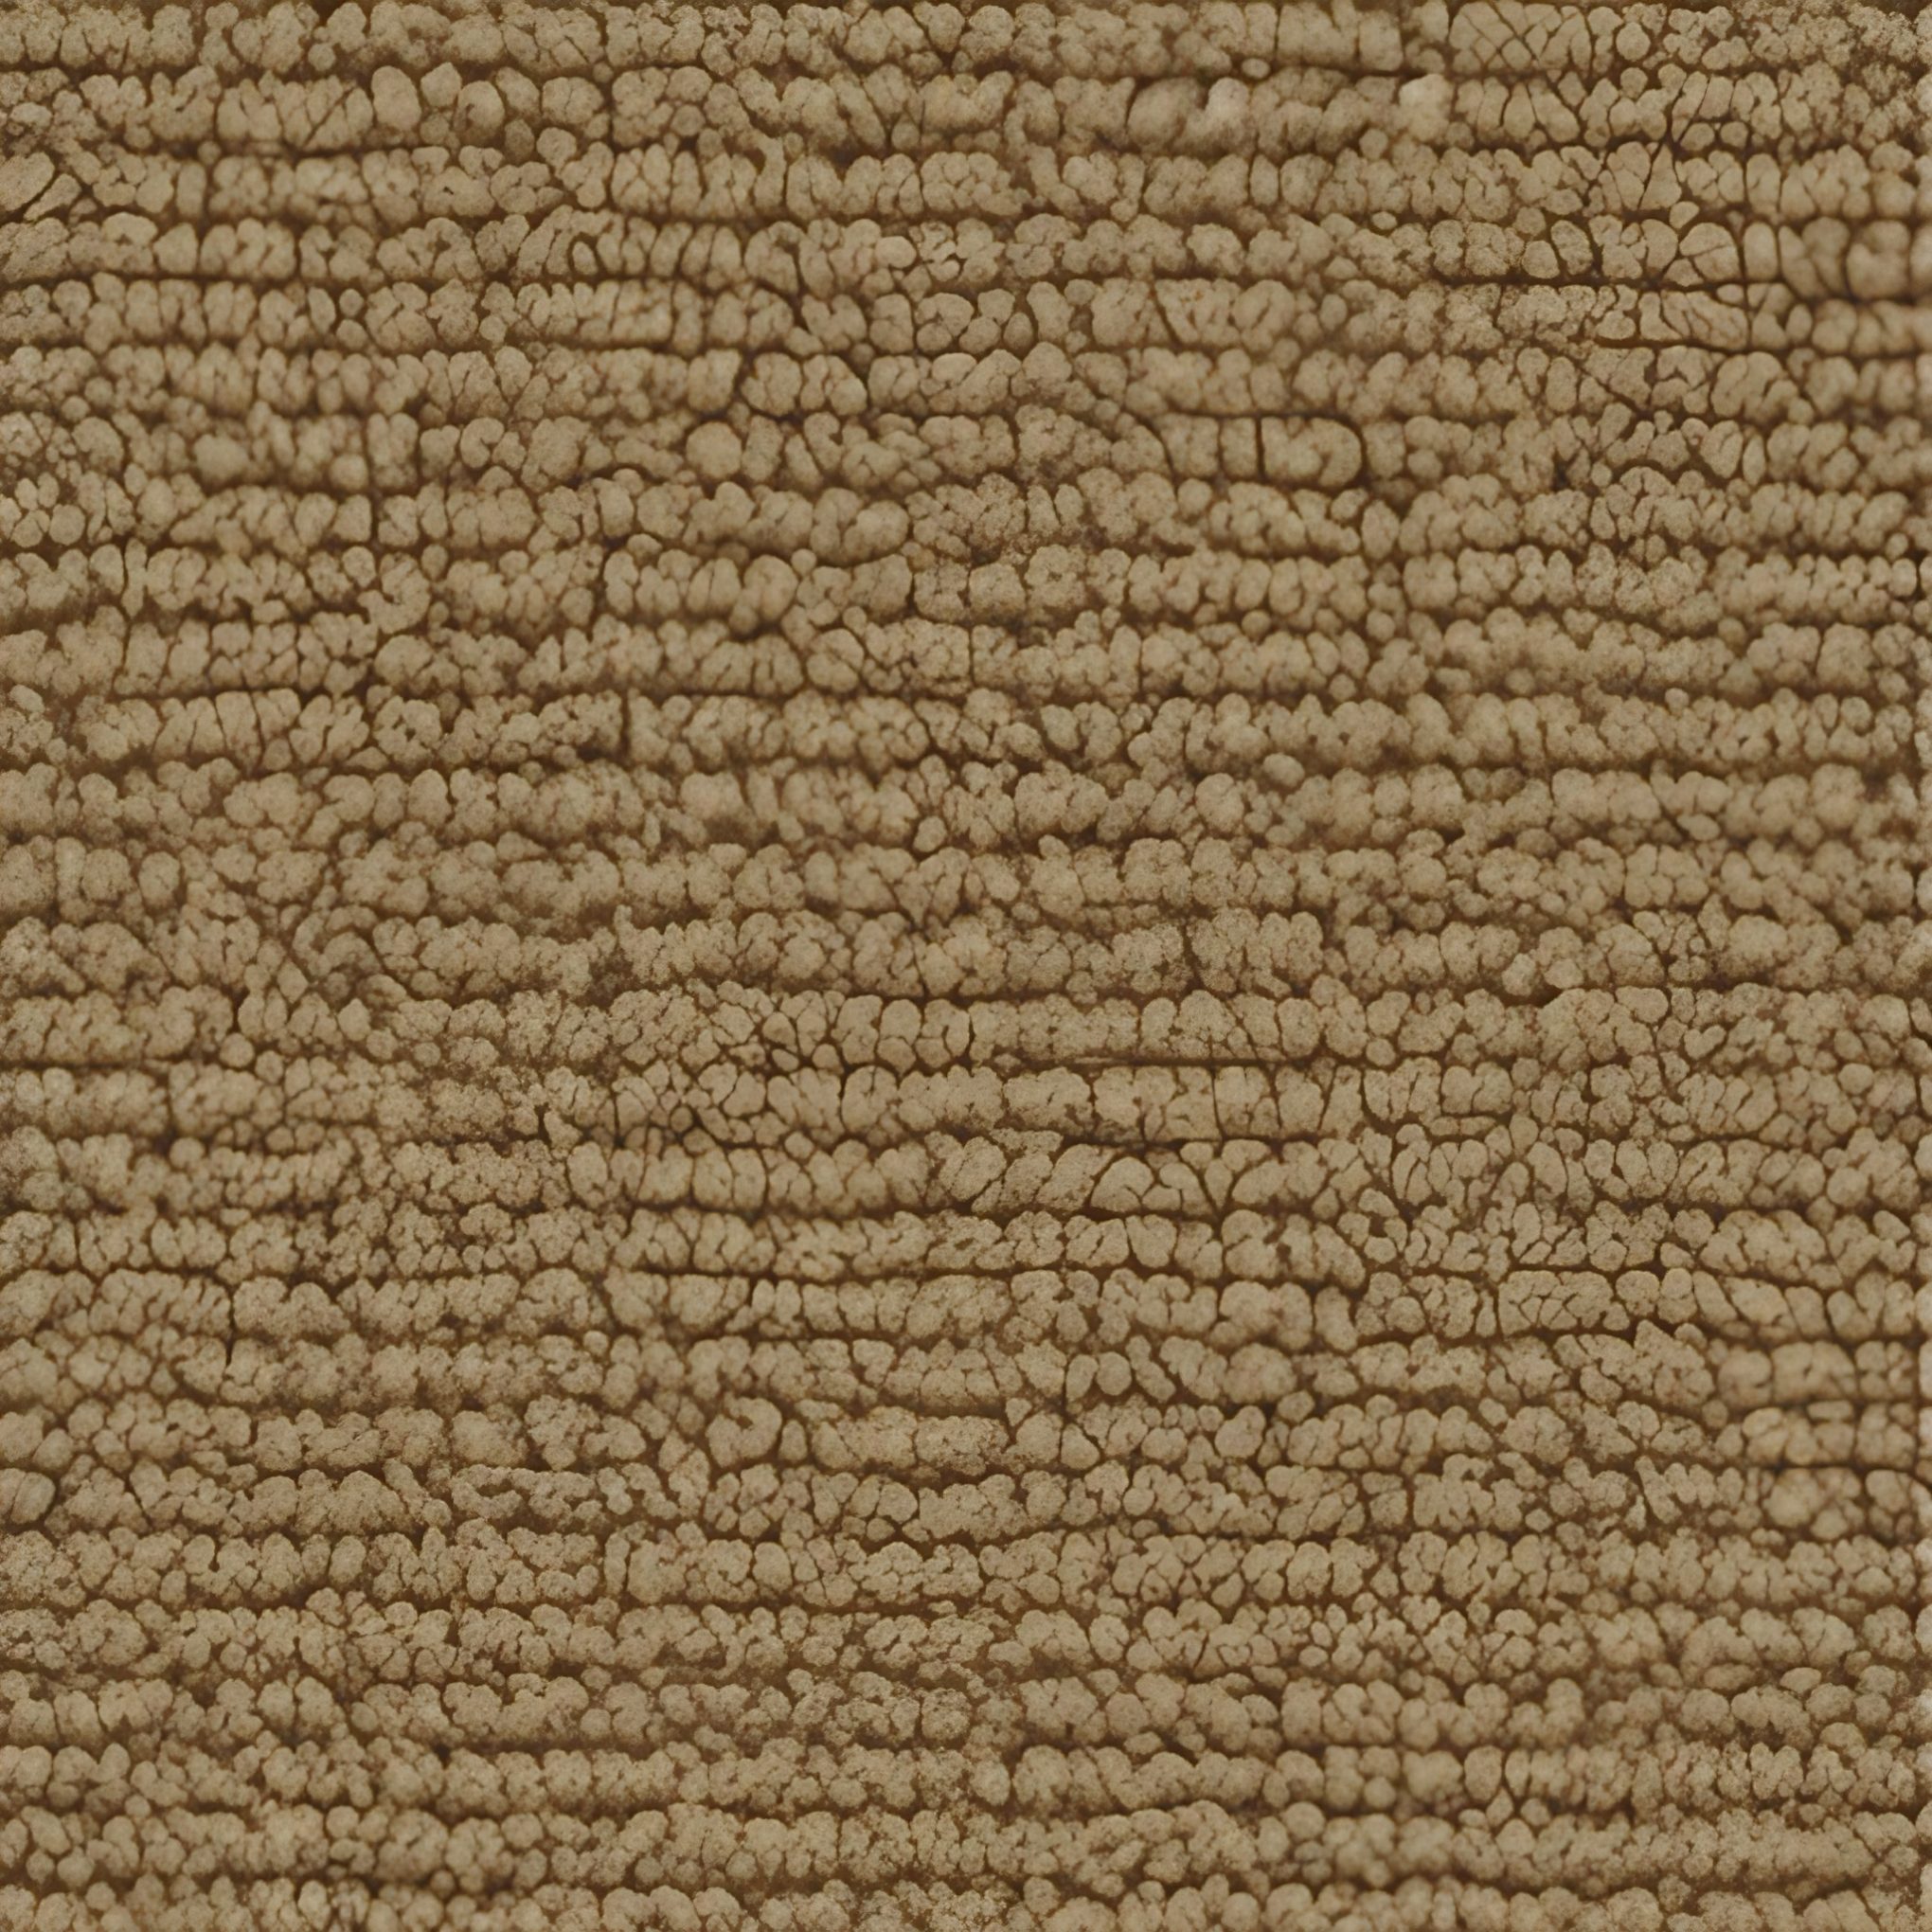 Natural Berber Carpet Texture Free Stock Image